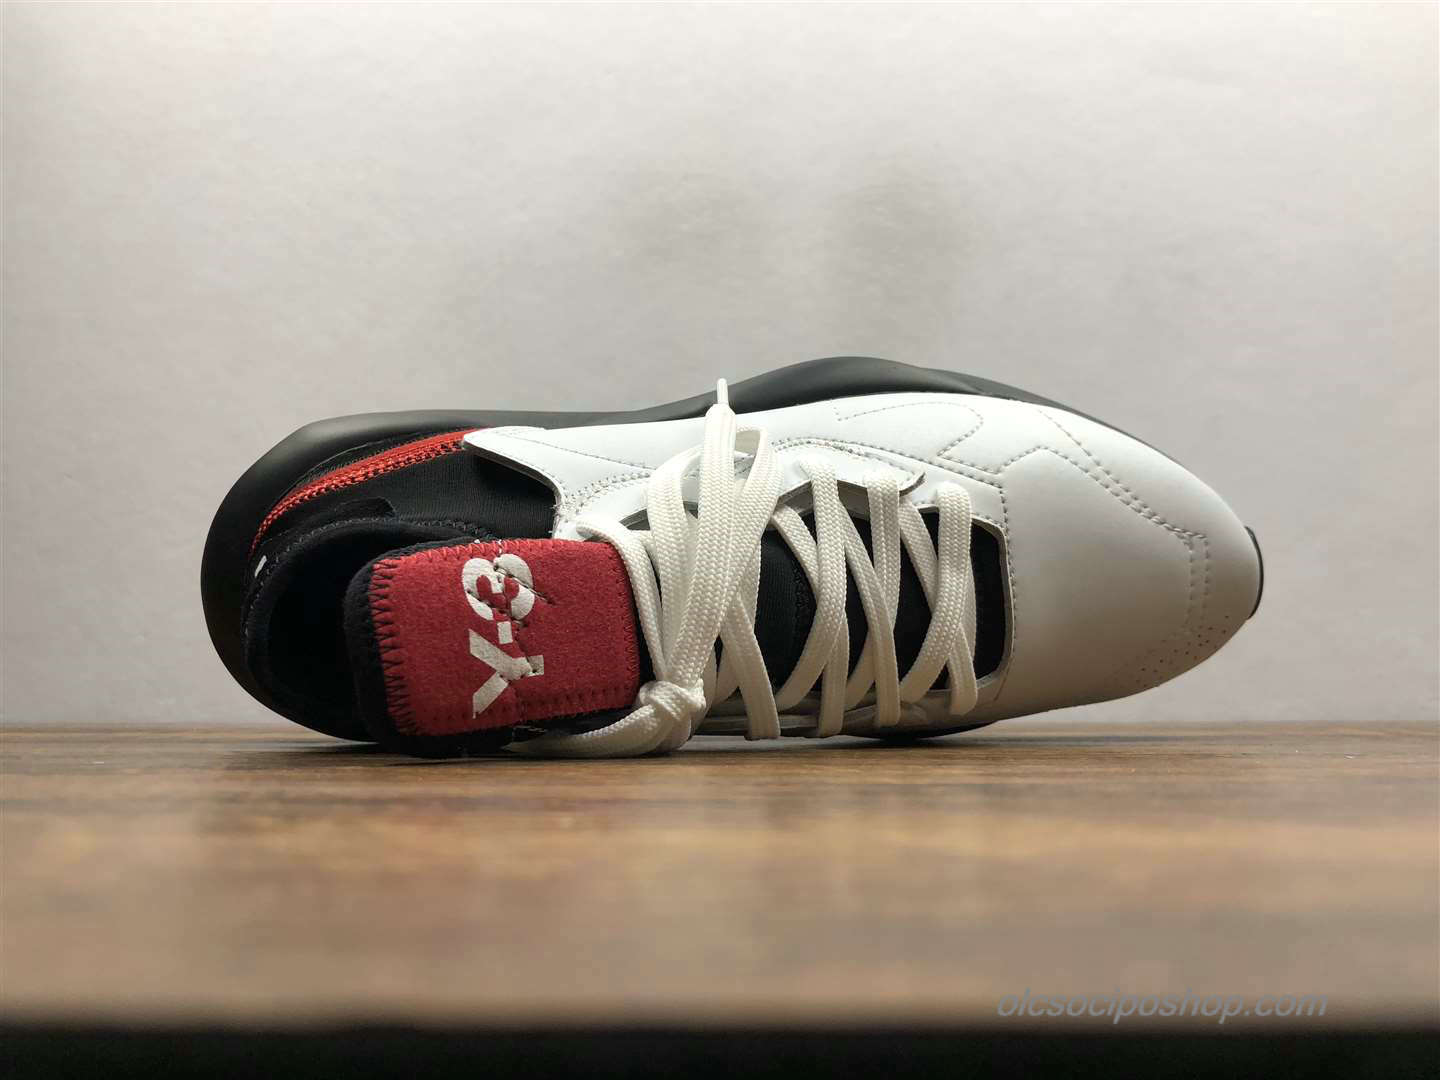 Yohji Yamamoto x Adidas Y-3 Kaiwa Chunky Fehér/Fekete/Piros Cipők (A8996)